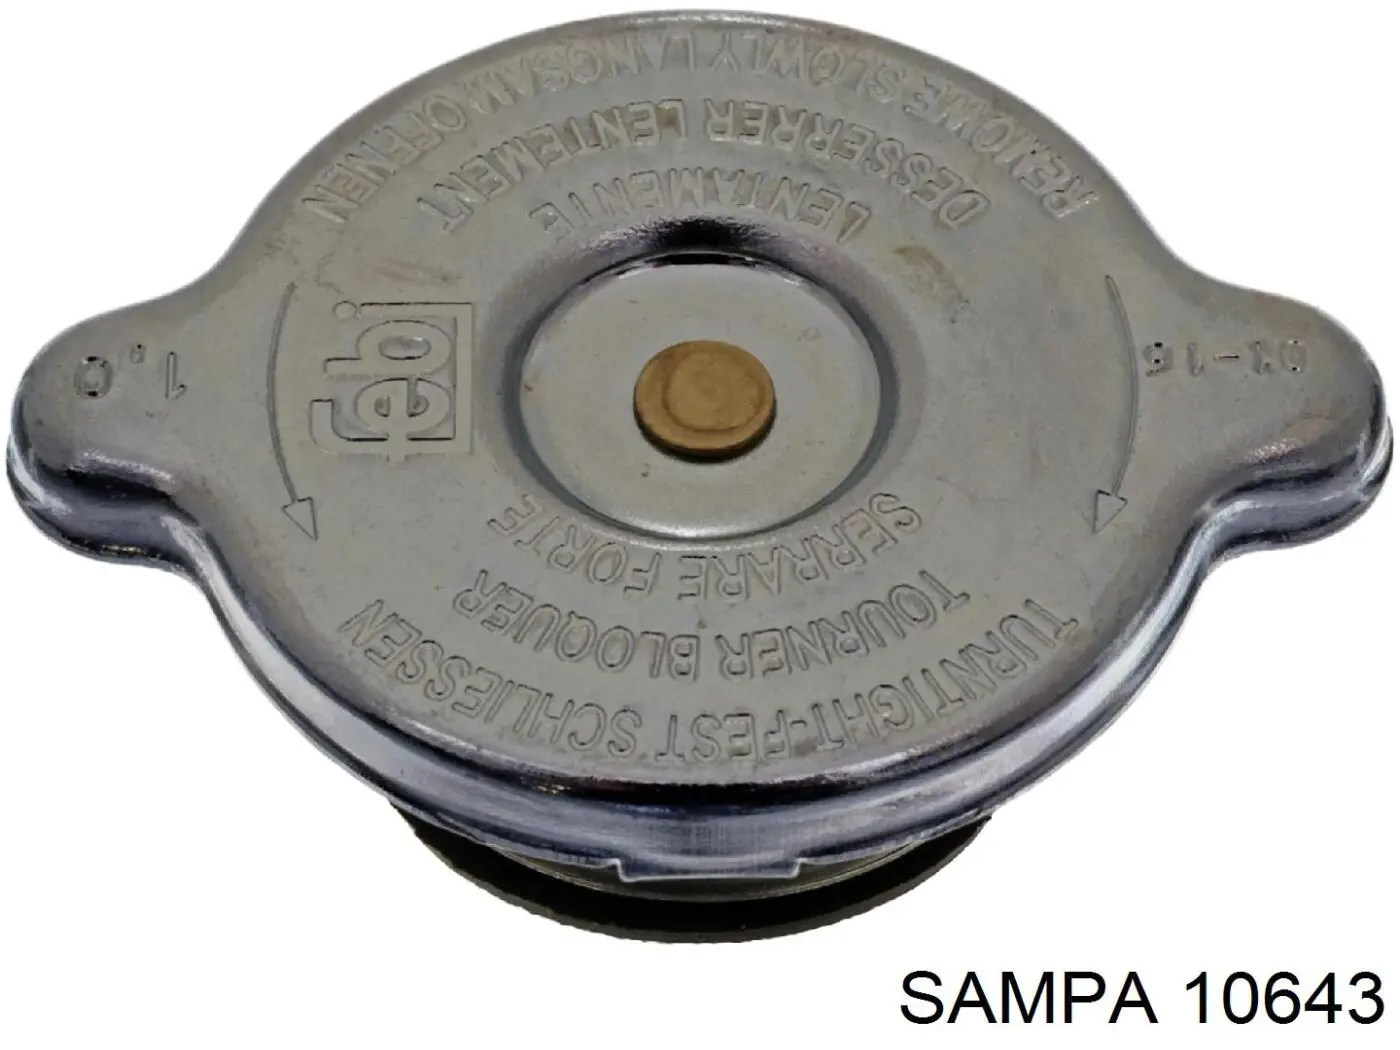 10643 Sampa Otomotiv‏ ремкомплект шкворня поворотного кулака